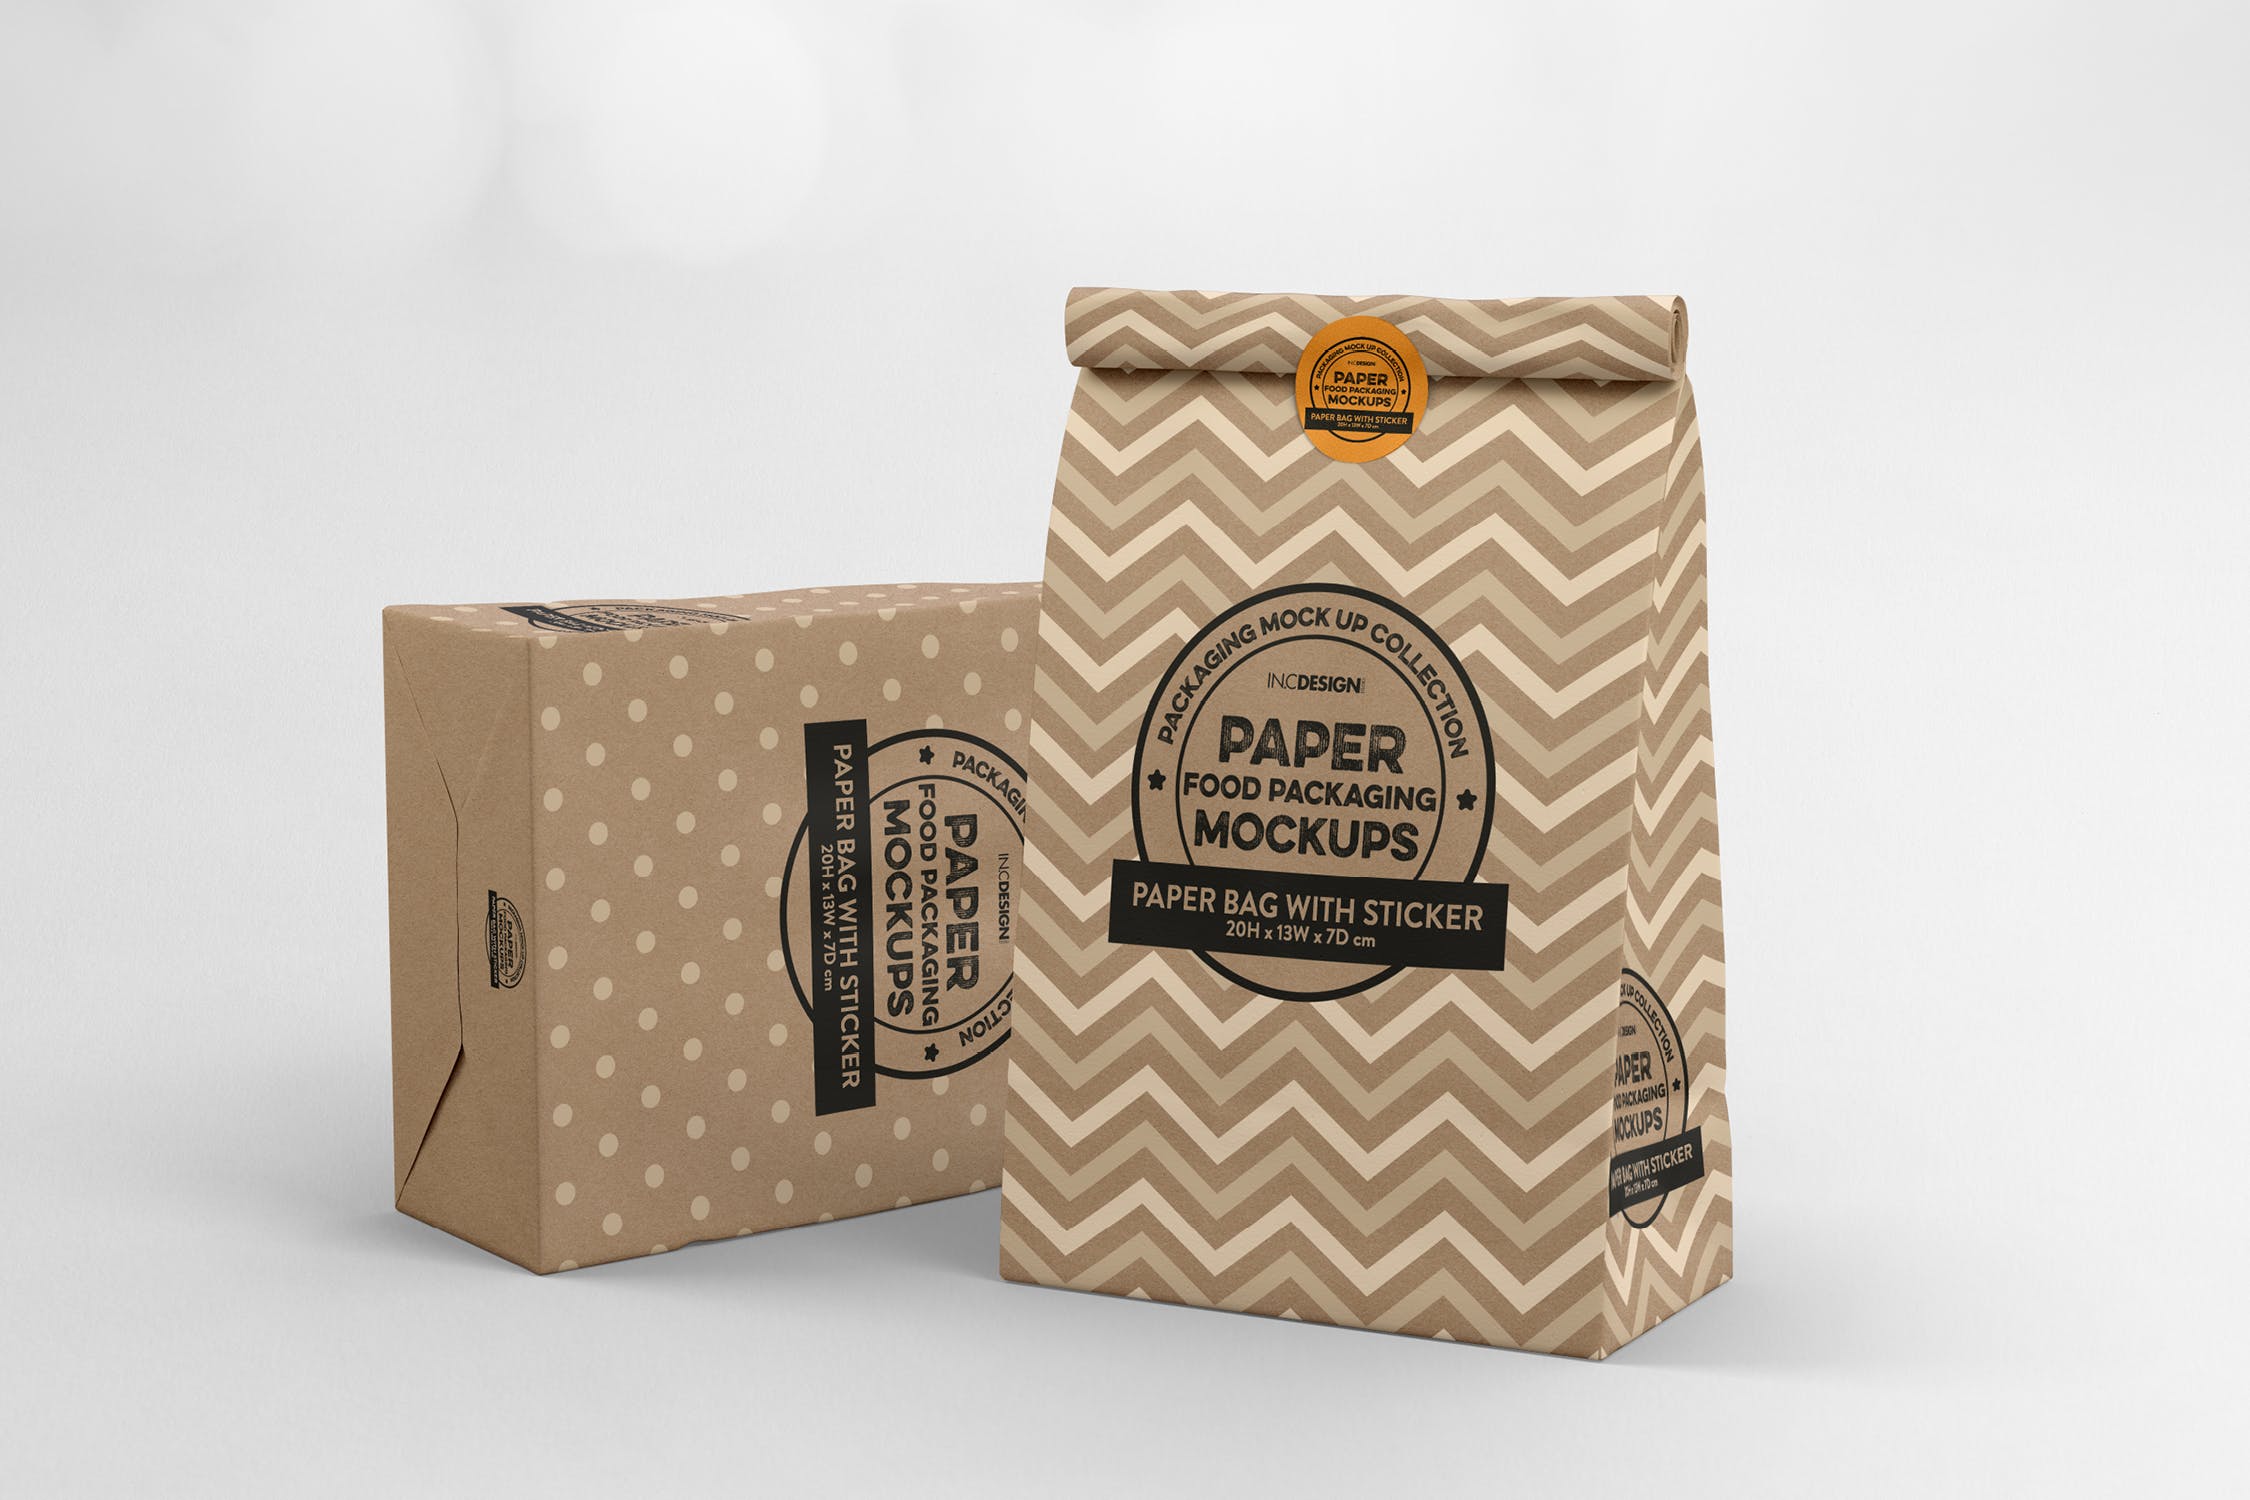 贴纸密封包装纸袋设计效果图第一素材精选 Paper Bag with sticker Seal Packaging Mockup插图(1)